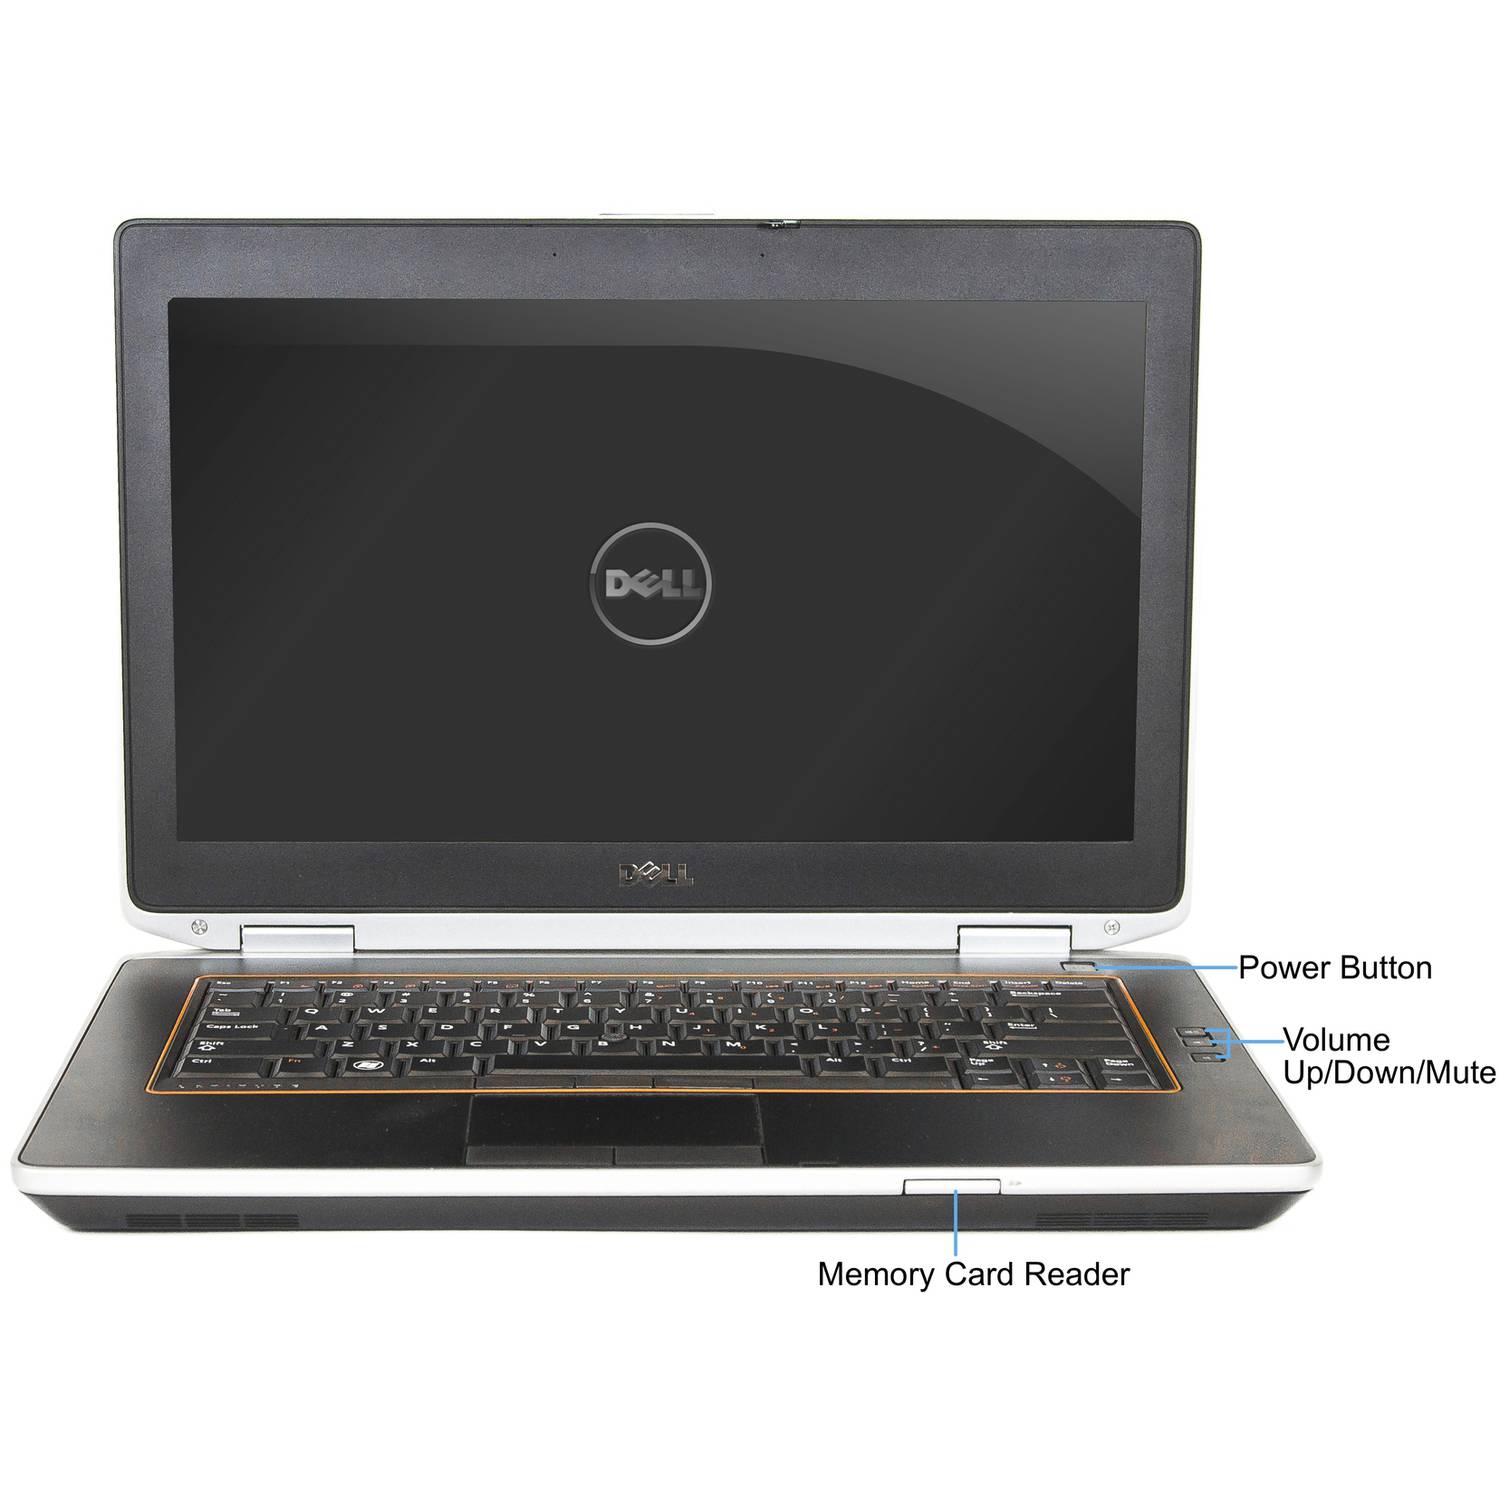 Restored Dell Black 14" Latitude E6420 Laptop PC with Intel Core i5 Processor, 4GB Memory, 500GB Hard Drive and Windows 10 Pro (Refurbished) - image 2 of 4